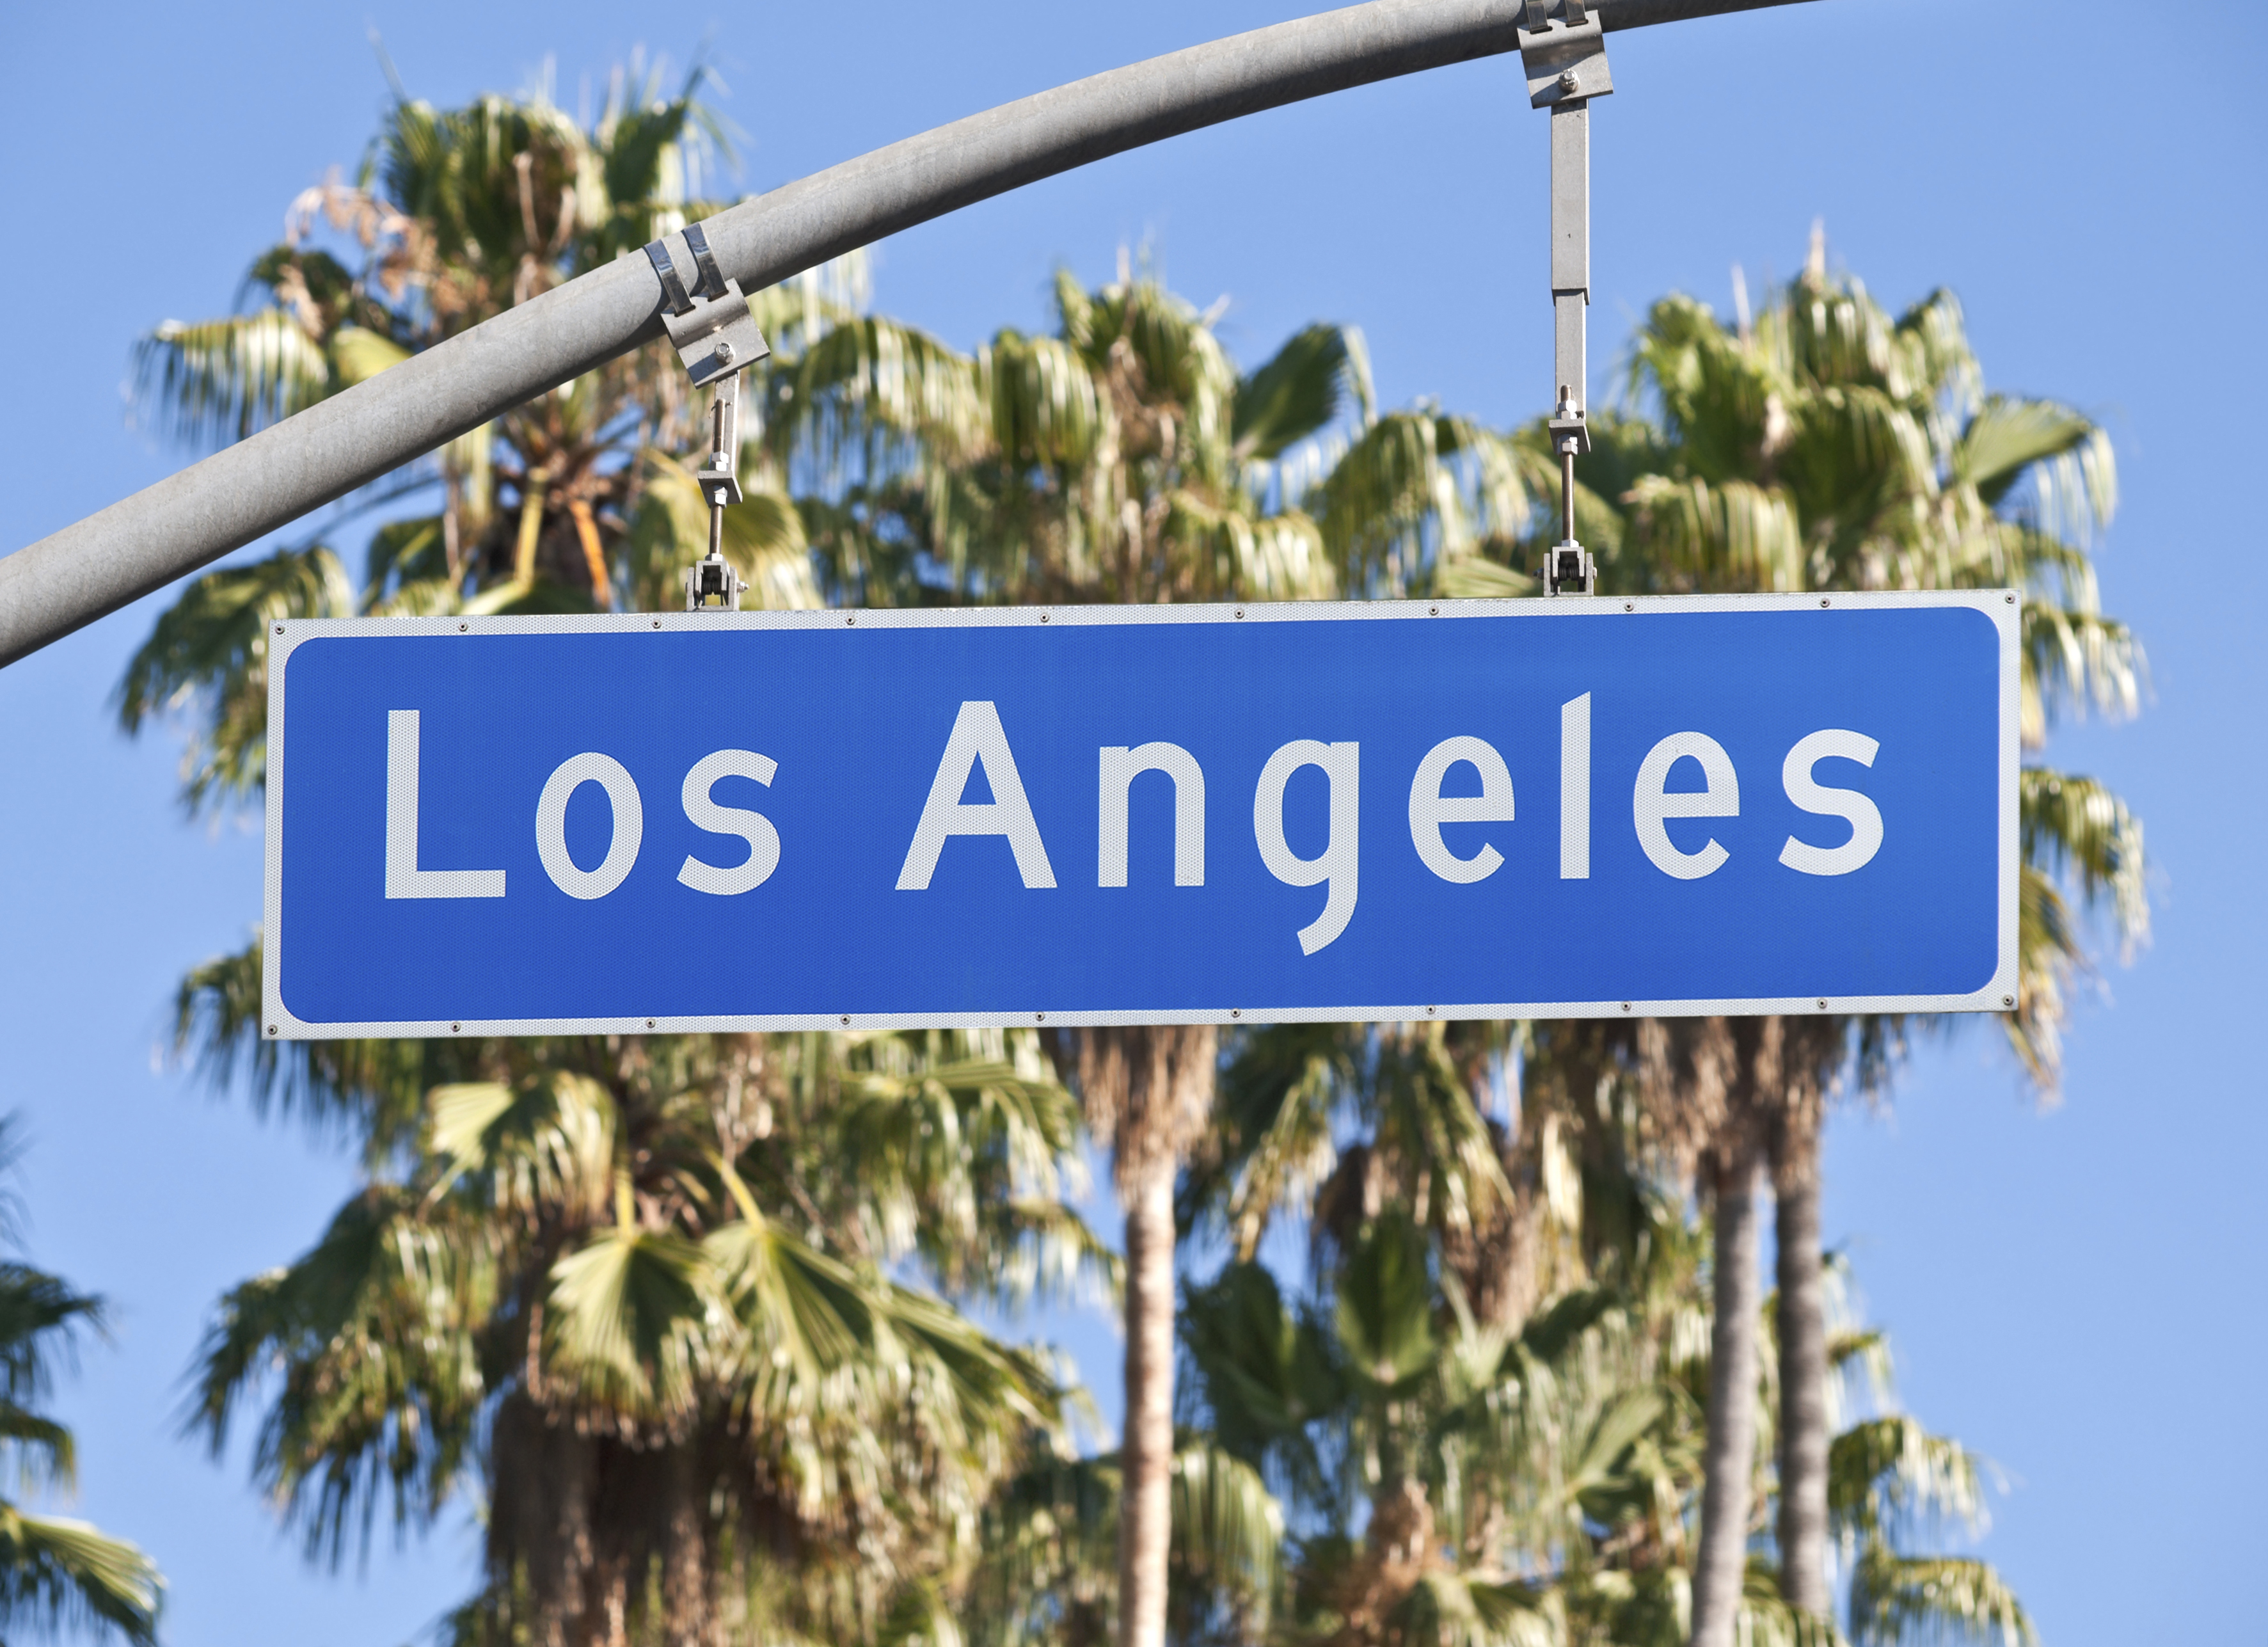 Los angeles 52 текст. Табличка Лос Анджелес. Лос Анджелес вывеска. Лос Анджелес надпись. Лос Анджелес вывеска Голливуд.